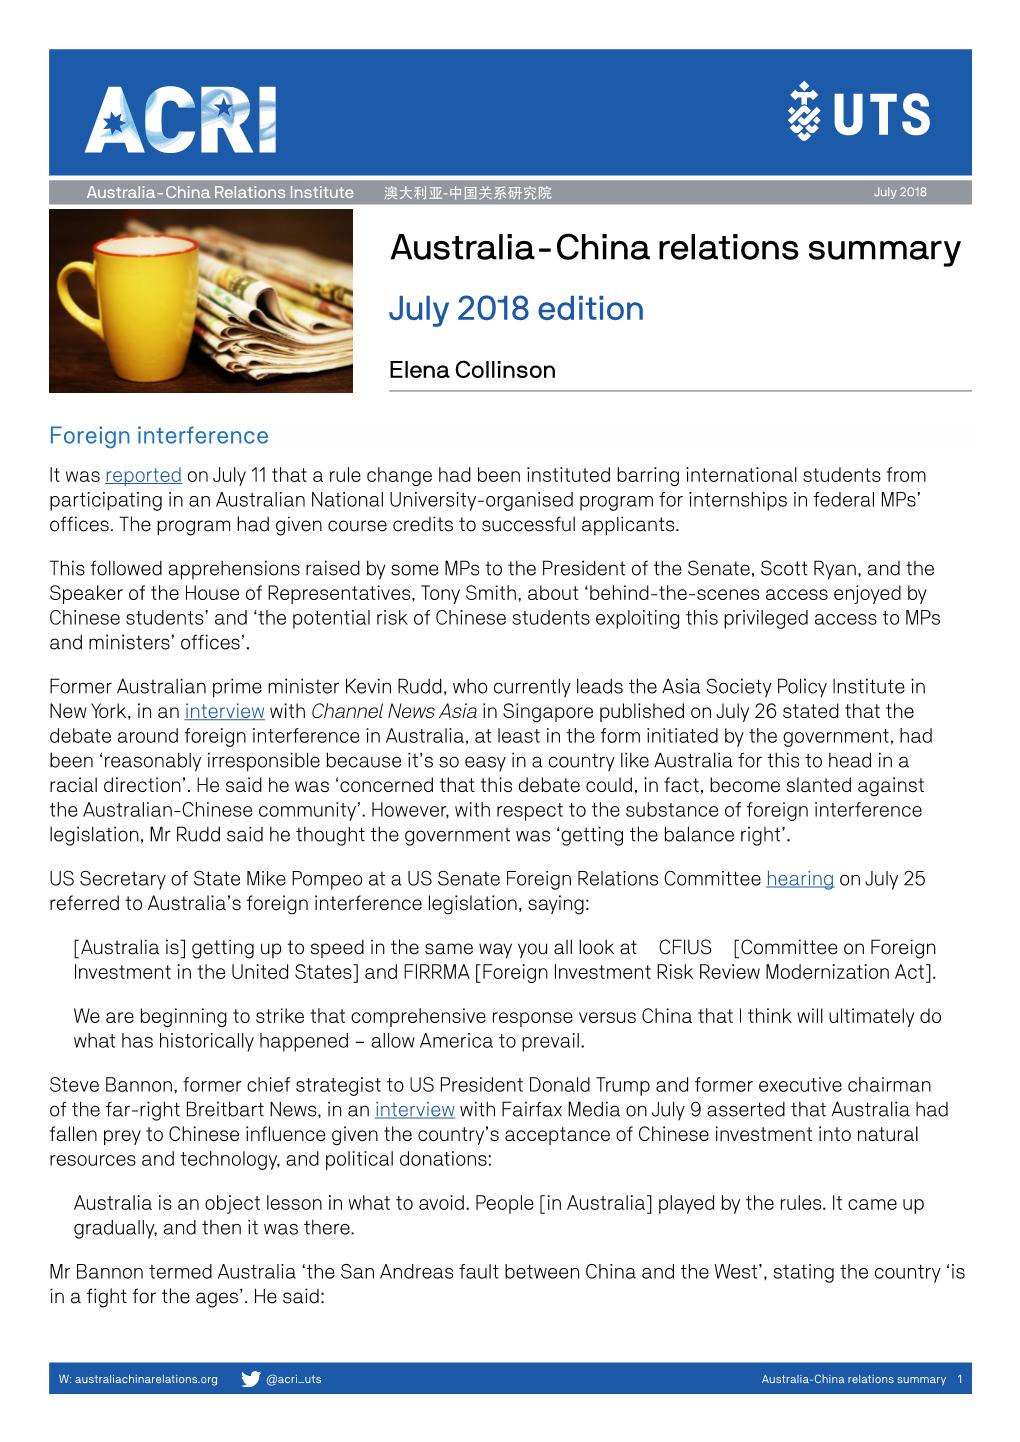 Australia-China Relations Summary July 2018 Edition